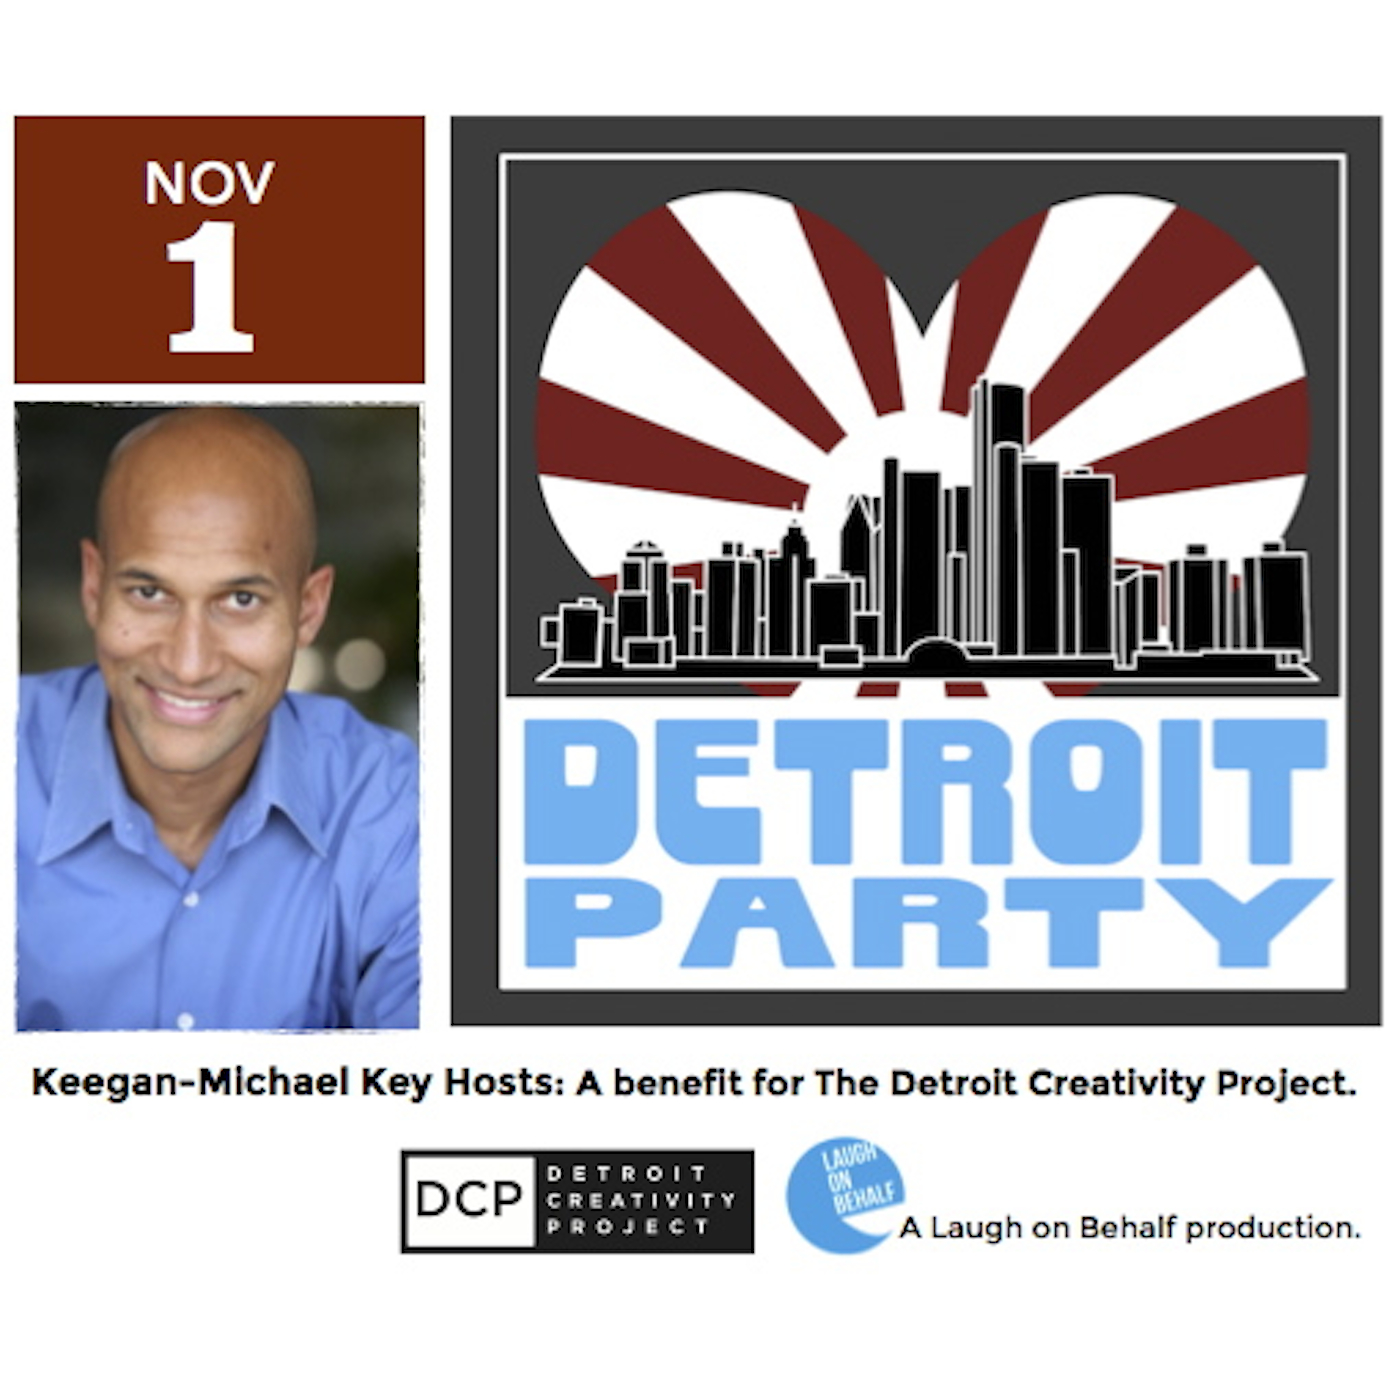 The Detroit Creativity Project